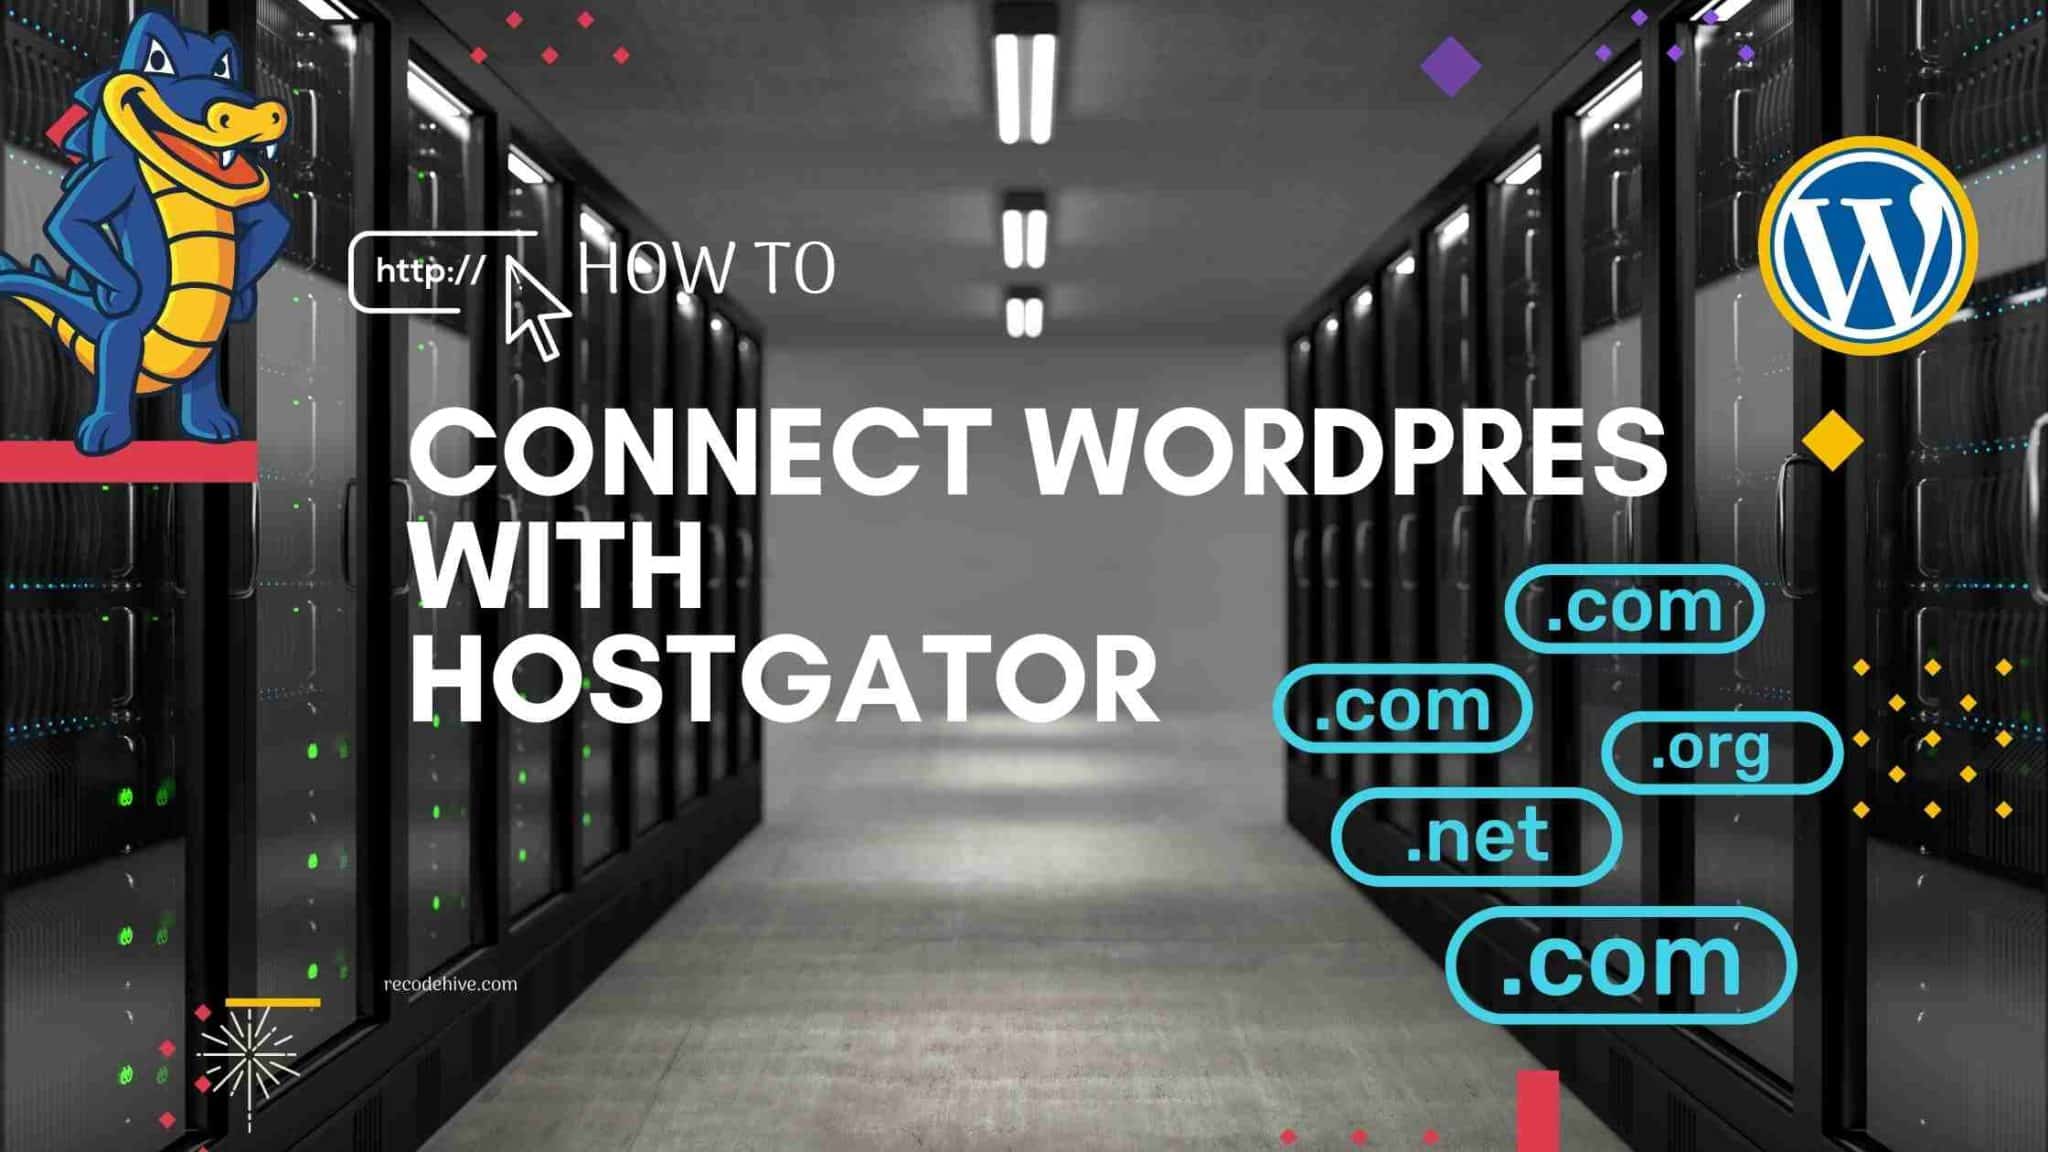 Hostgator and Wordpress linking